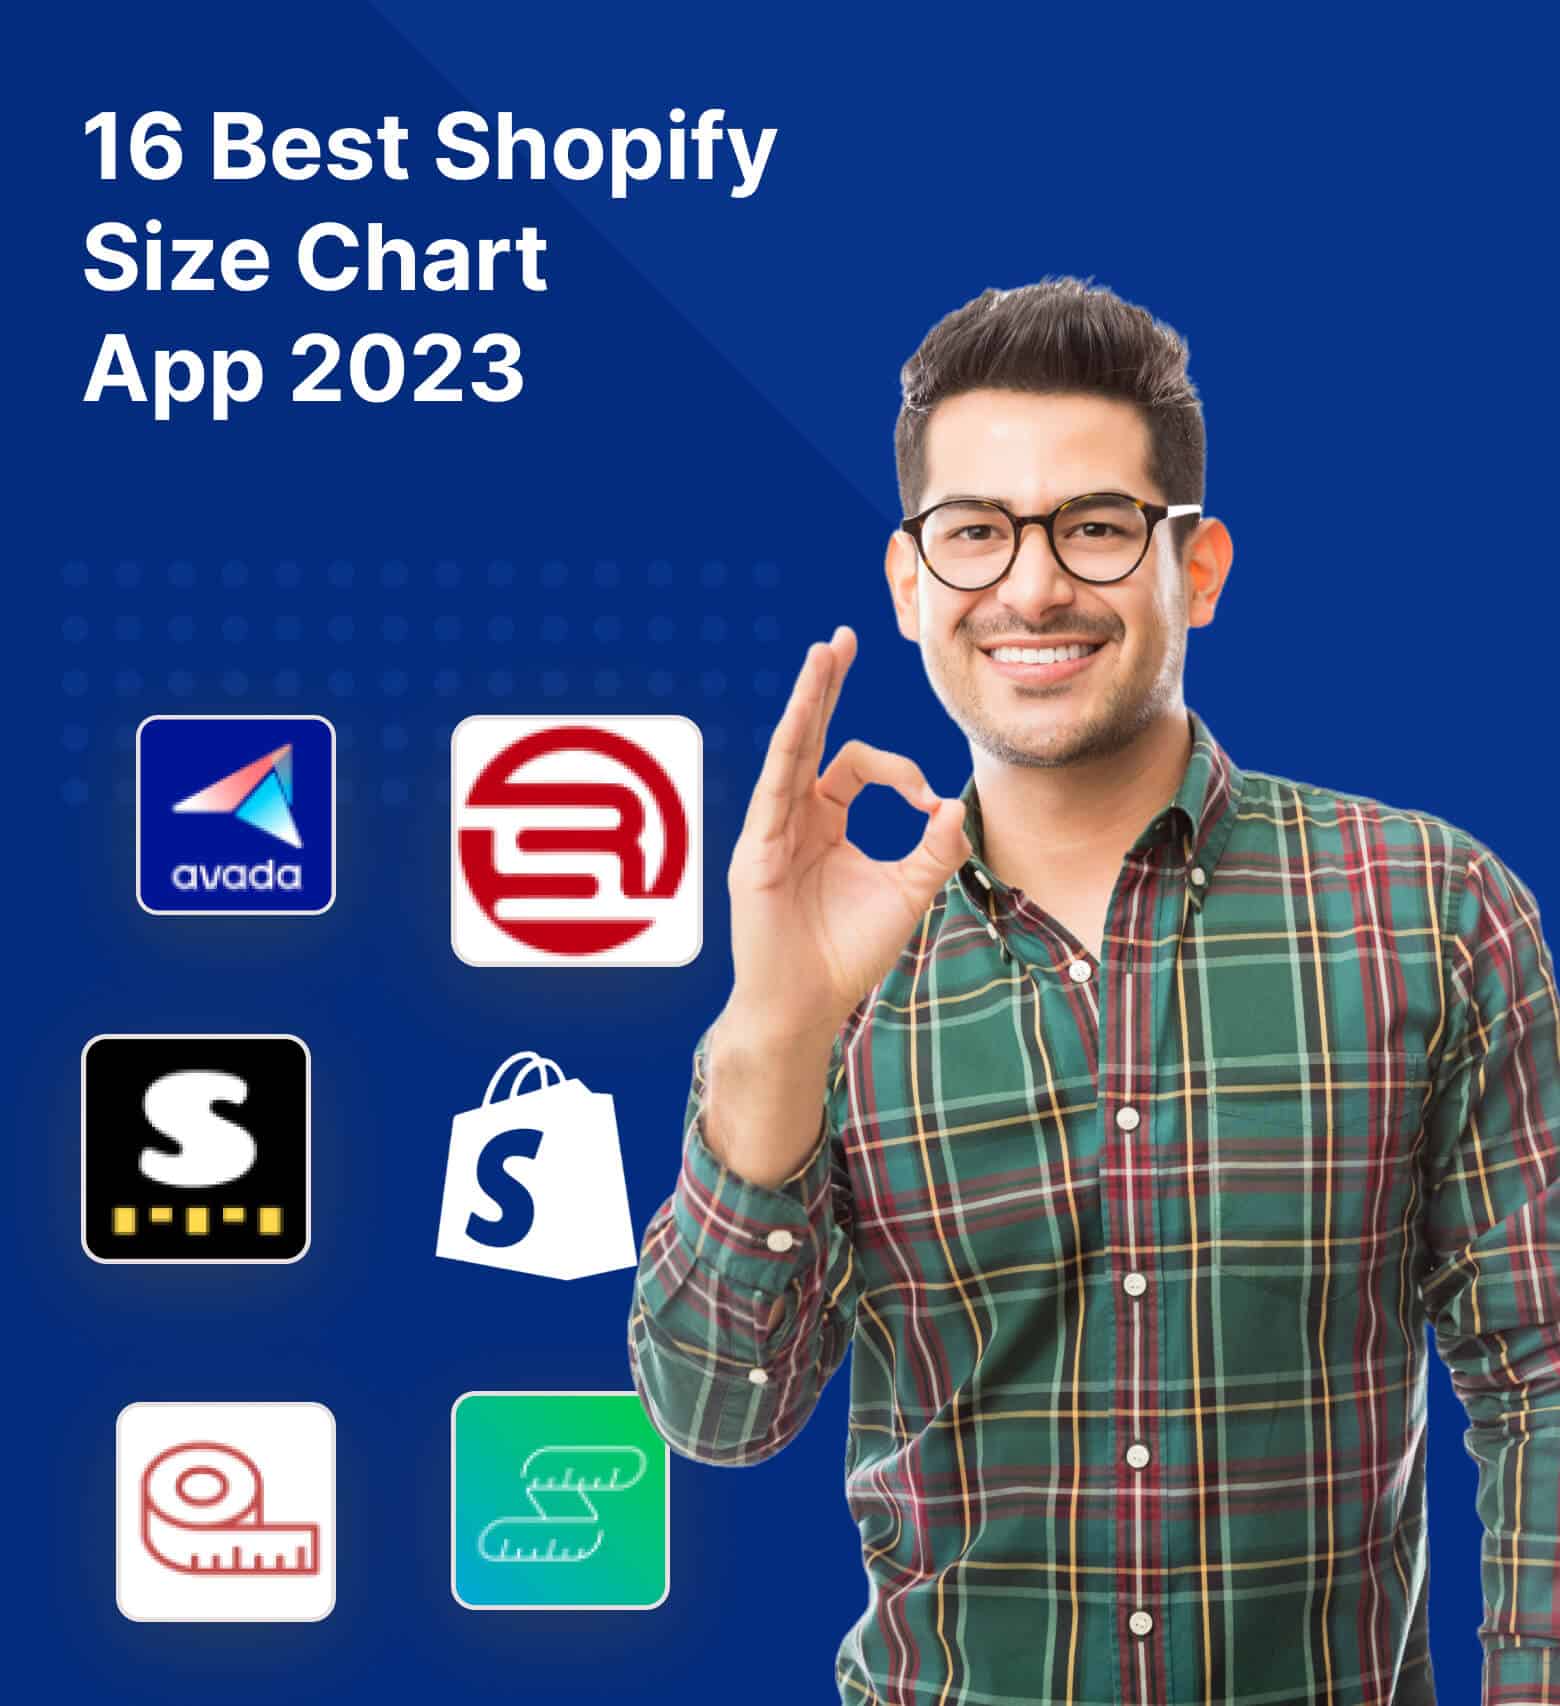 Best Shopify Size Chart App